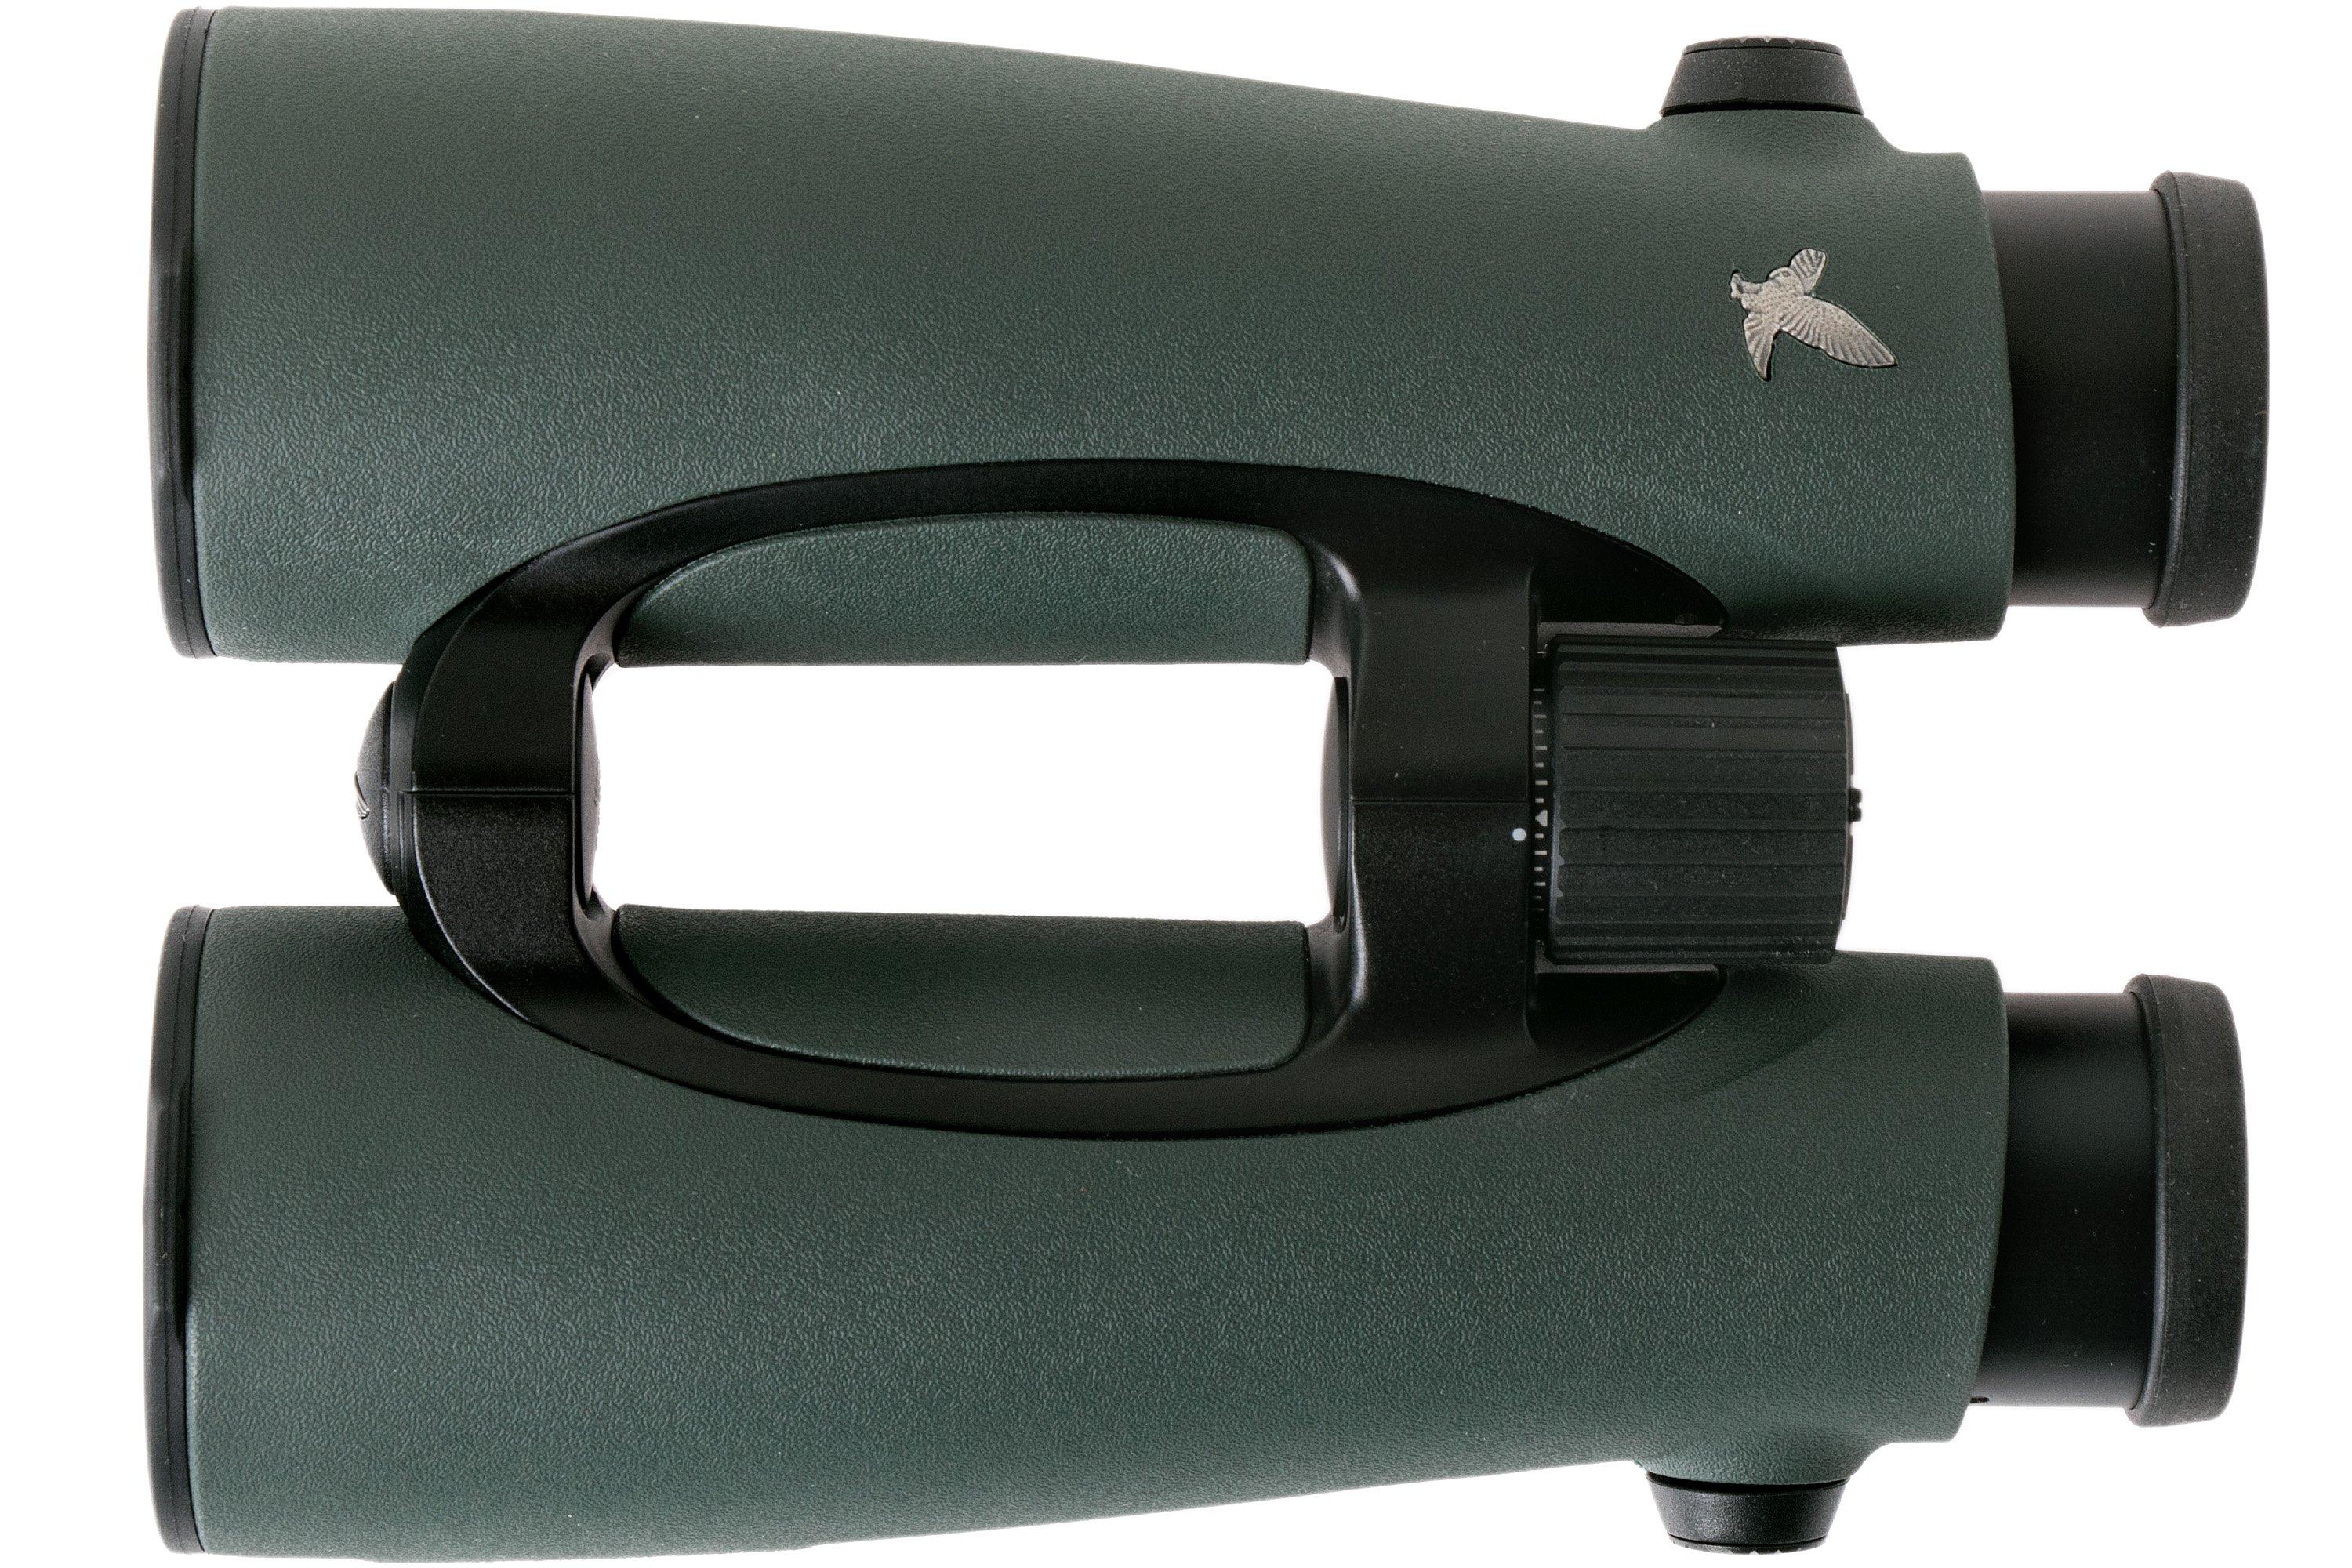 Swarovski 10x50 EL50 FieldPro Binoculars (Green) - Product Photo 7 - Partially folded view